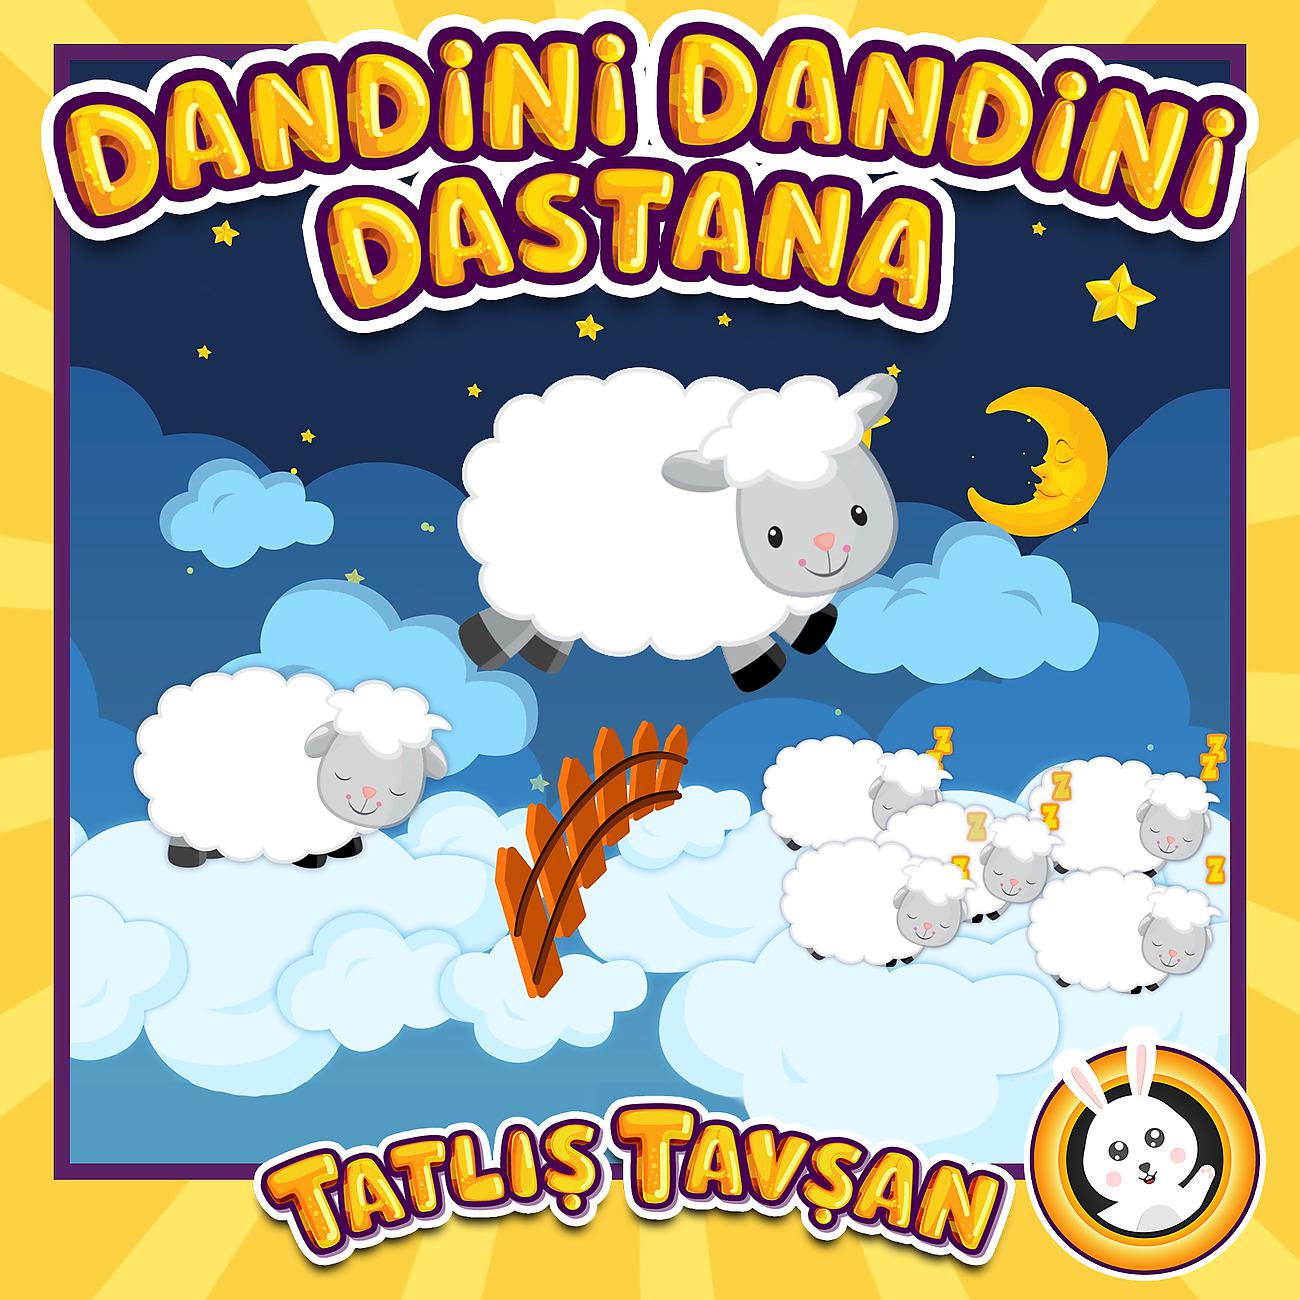 Постер альбома Dandini Dandini Dastana